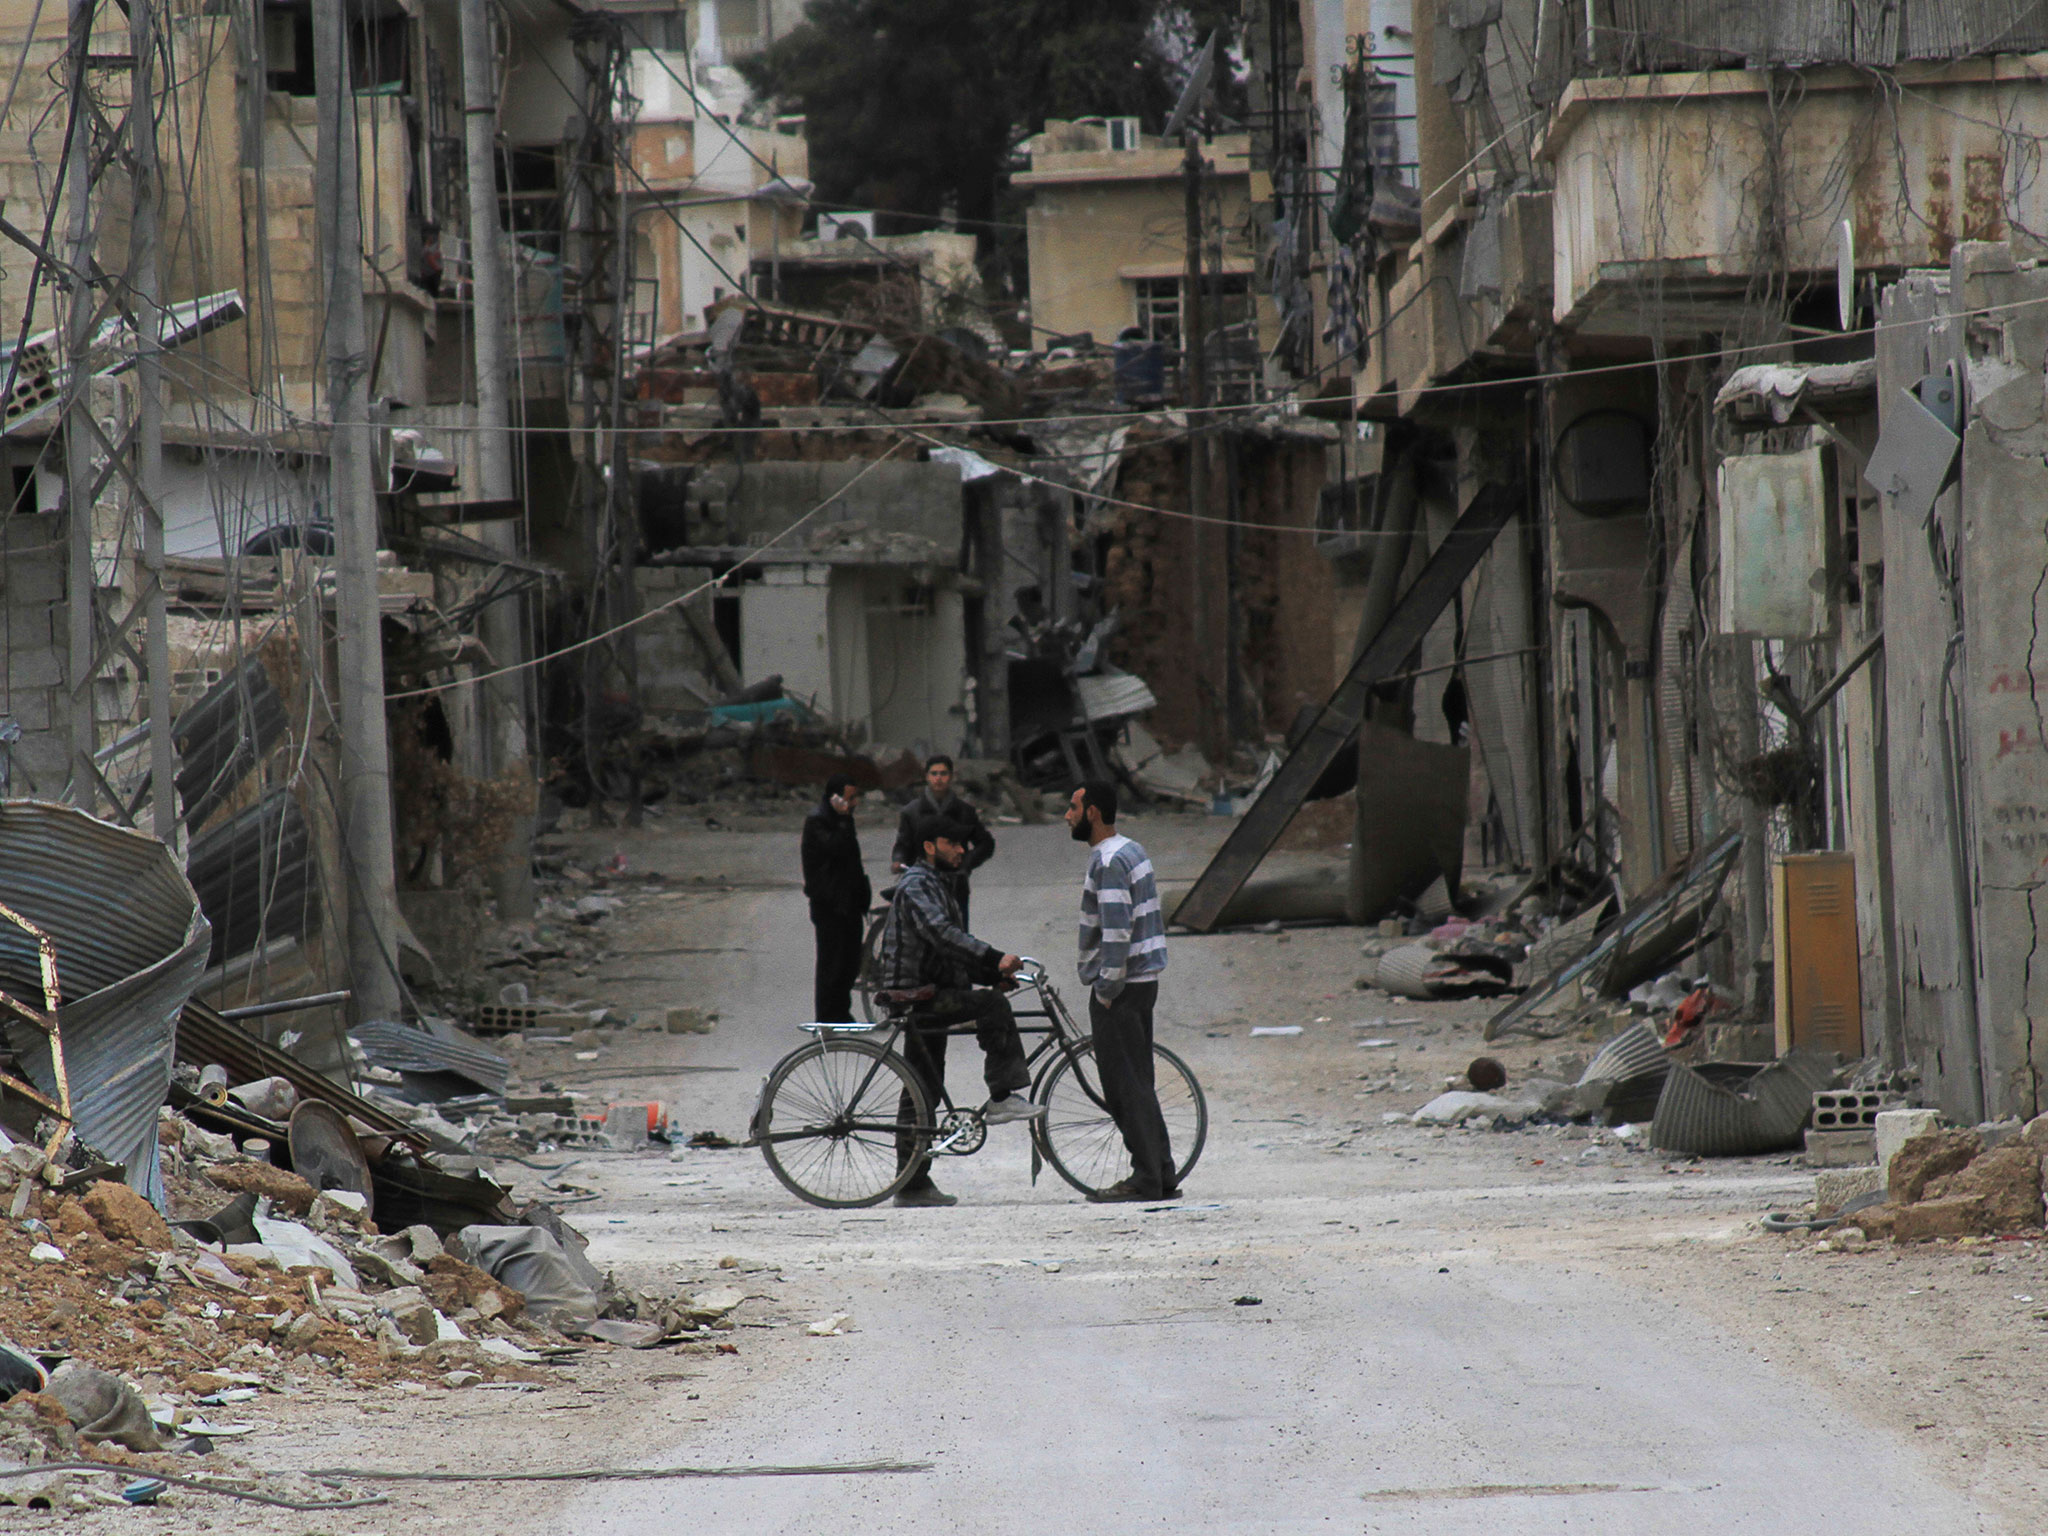 Daraya has been under siege since 2012